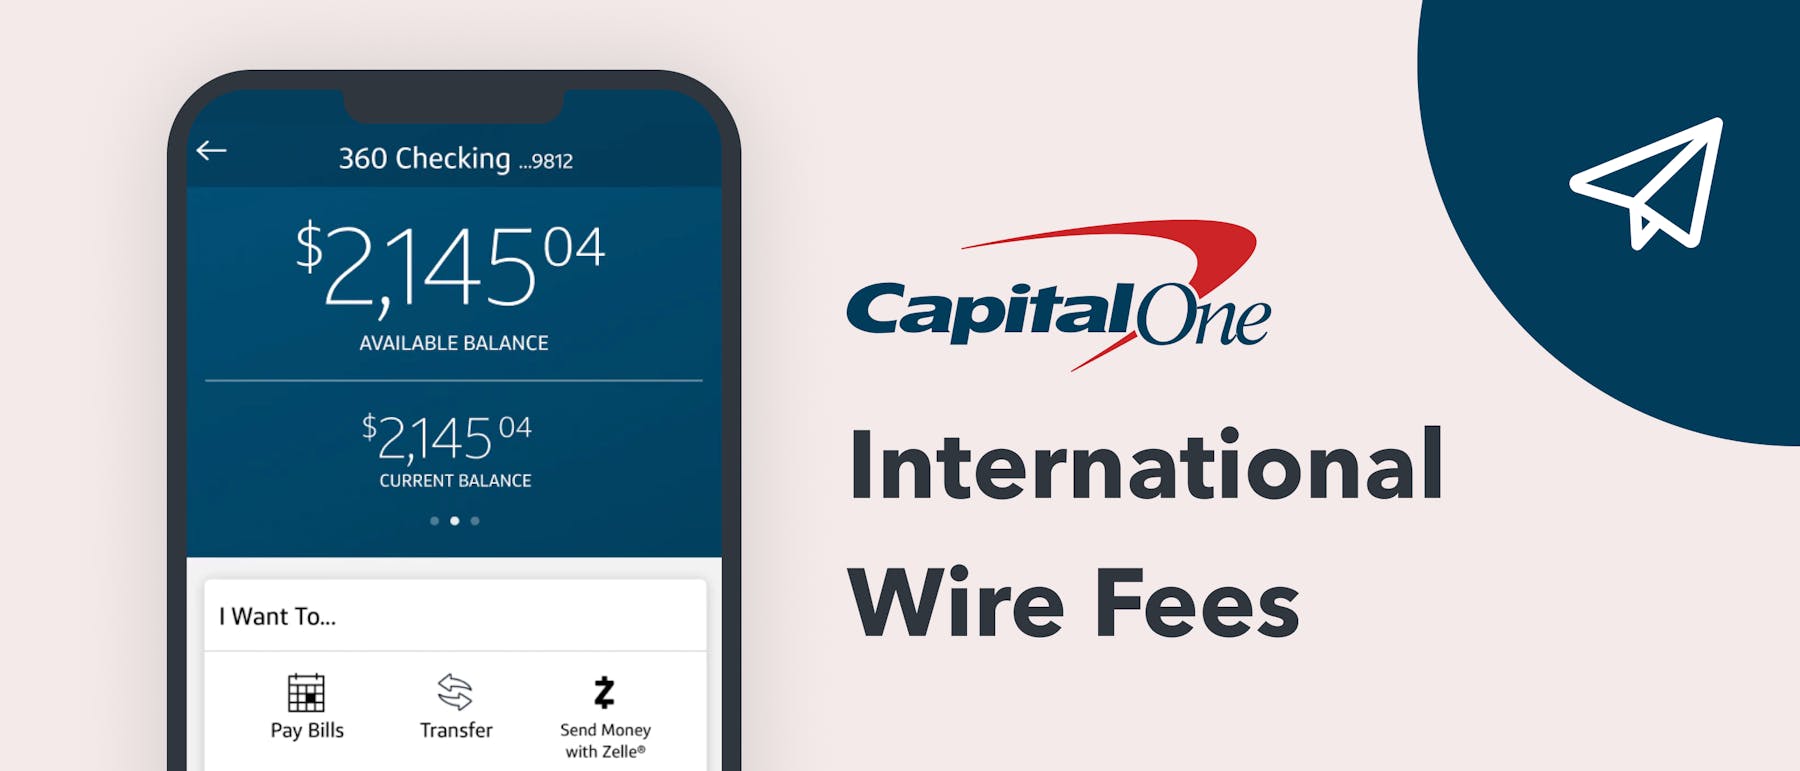 CapitalOne International Wire Fees Analyzed by Monito